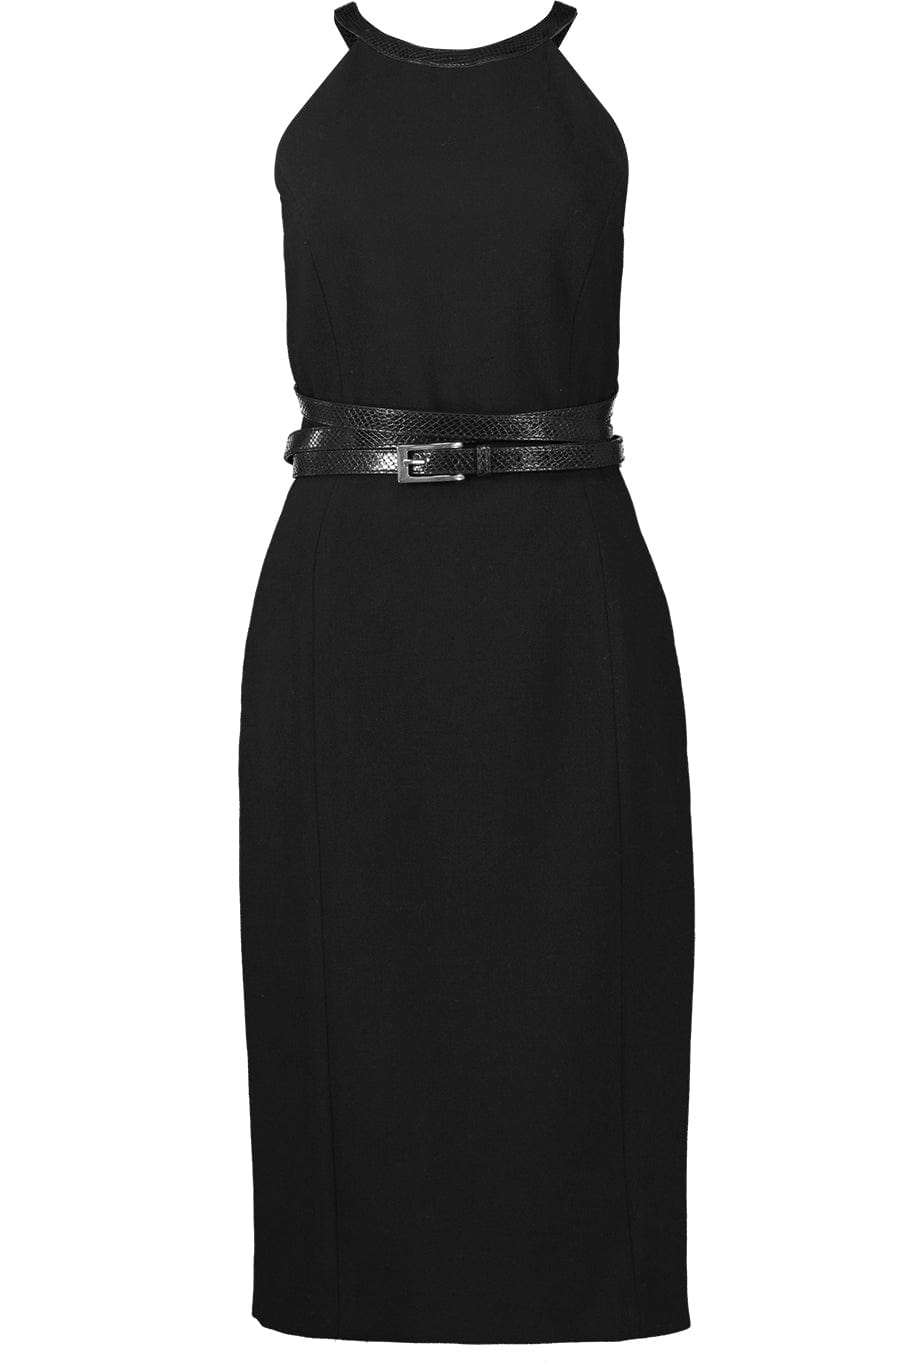 MICHAEL KORS-Belted Detail Sheath Dress-BLACK